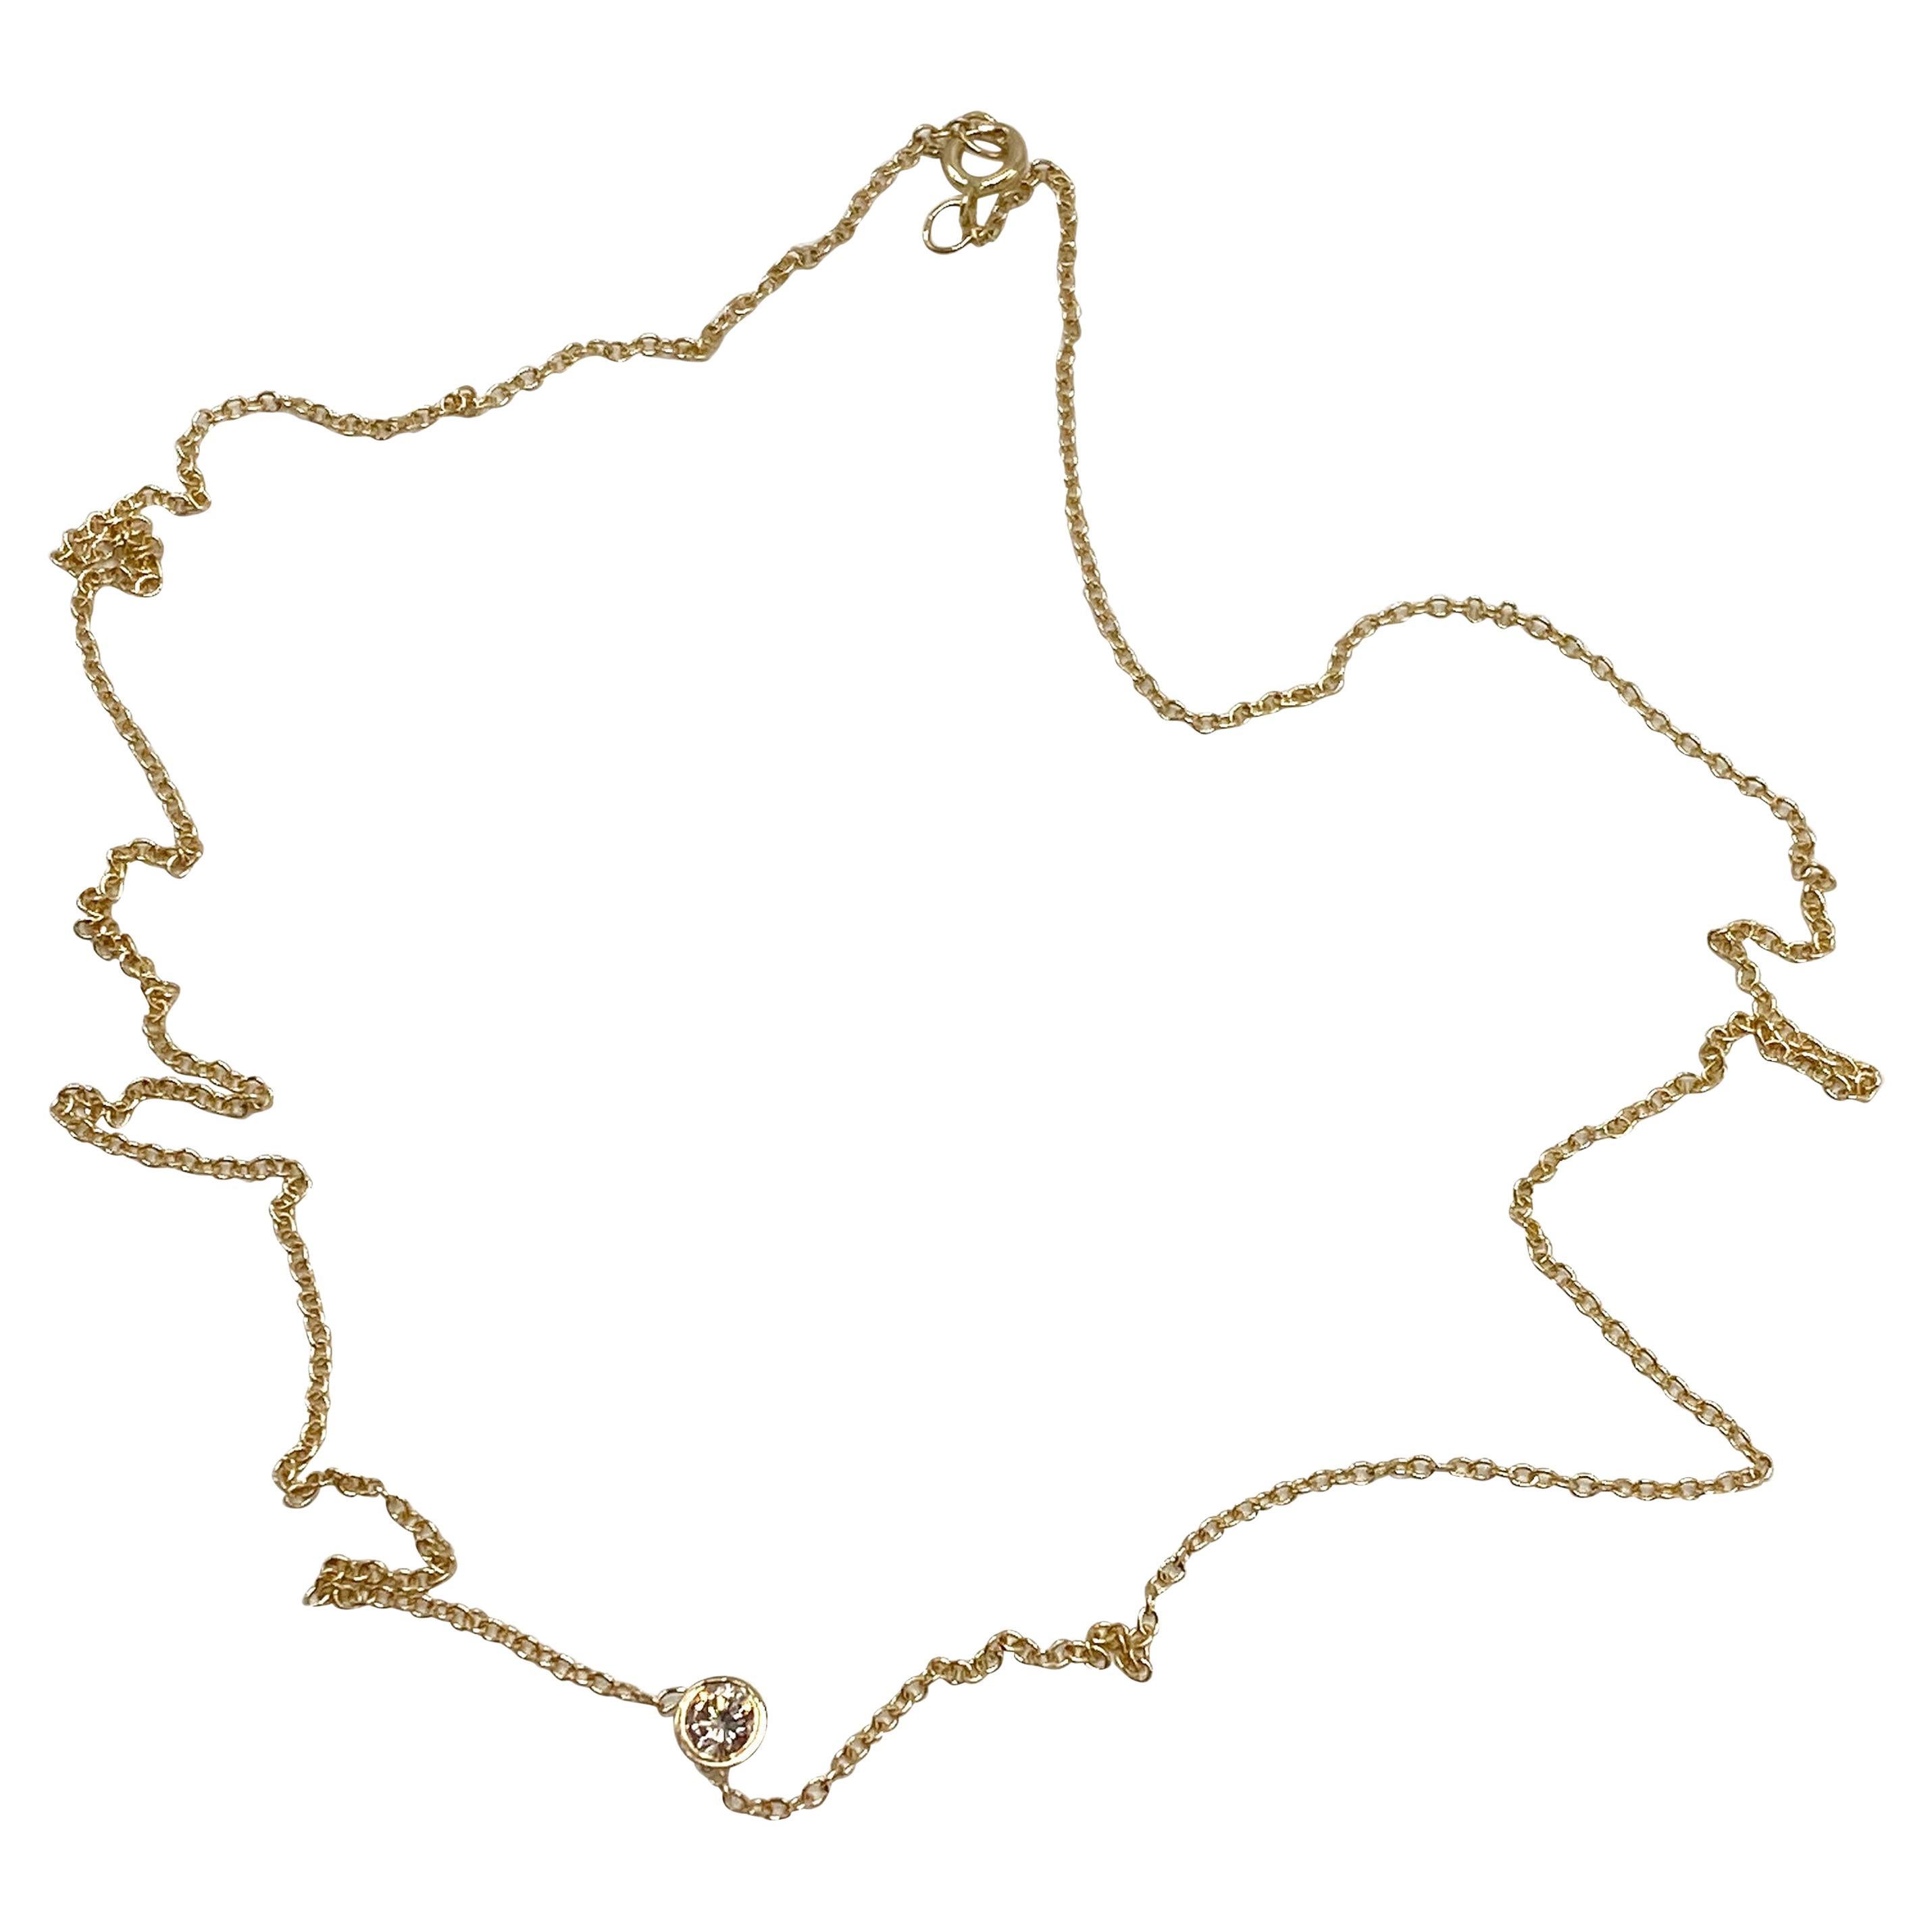 Diamond Gold Chain Choker Necklace J Dauphin
16